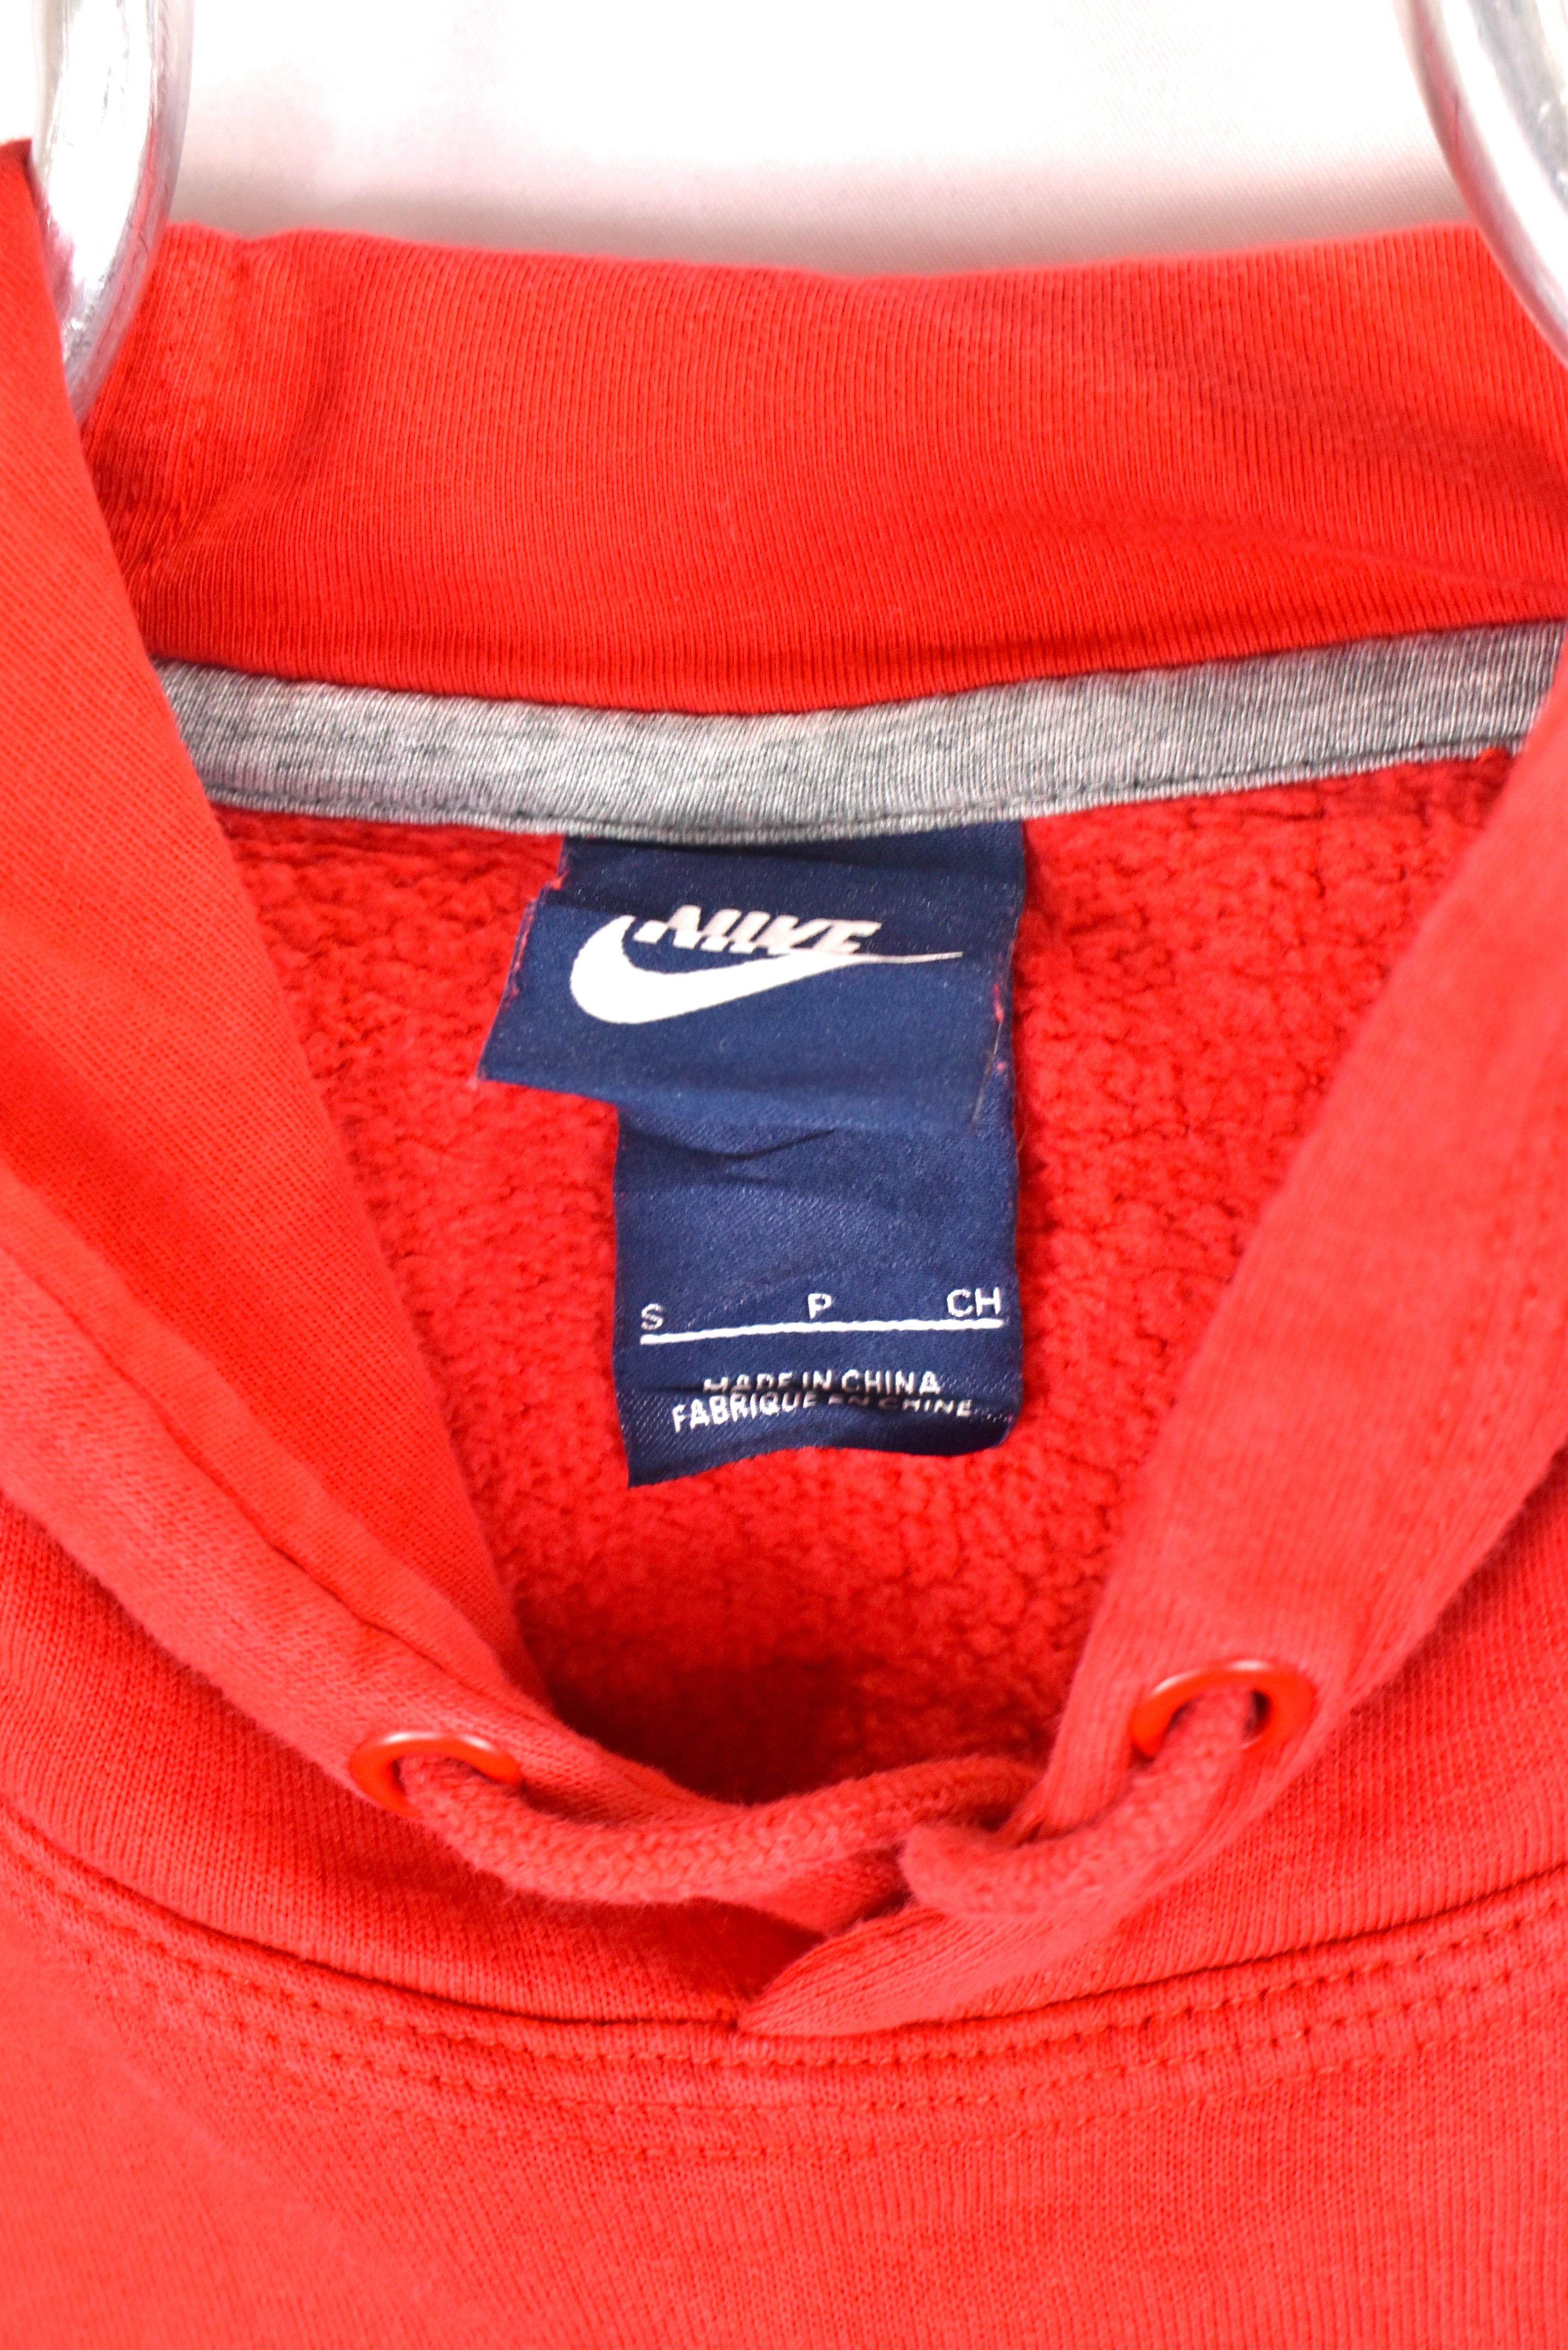 Vintage Nike hoodie, red embroidered sweatshirt - AU Small NIKE